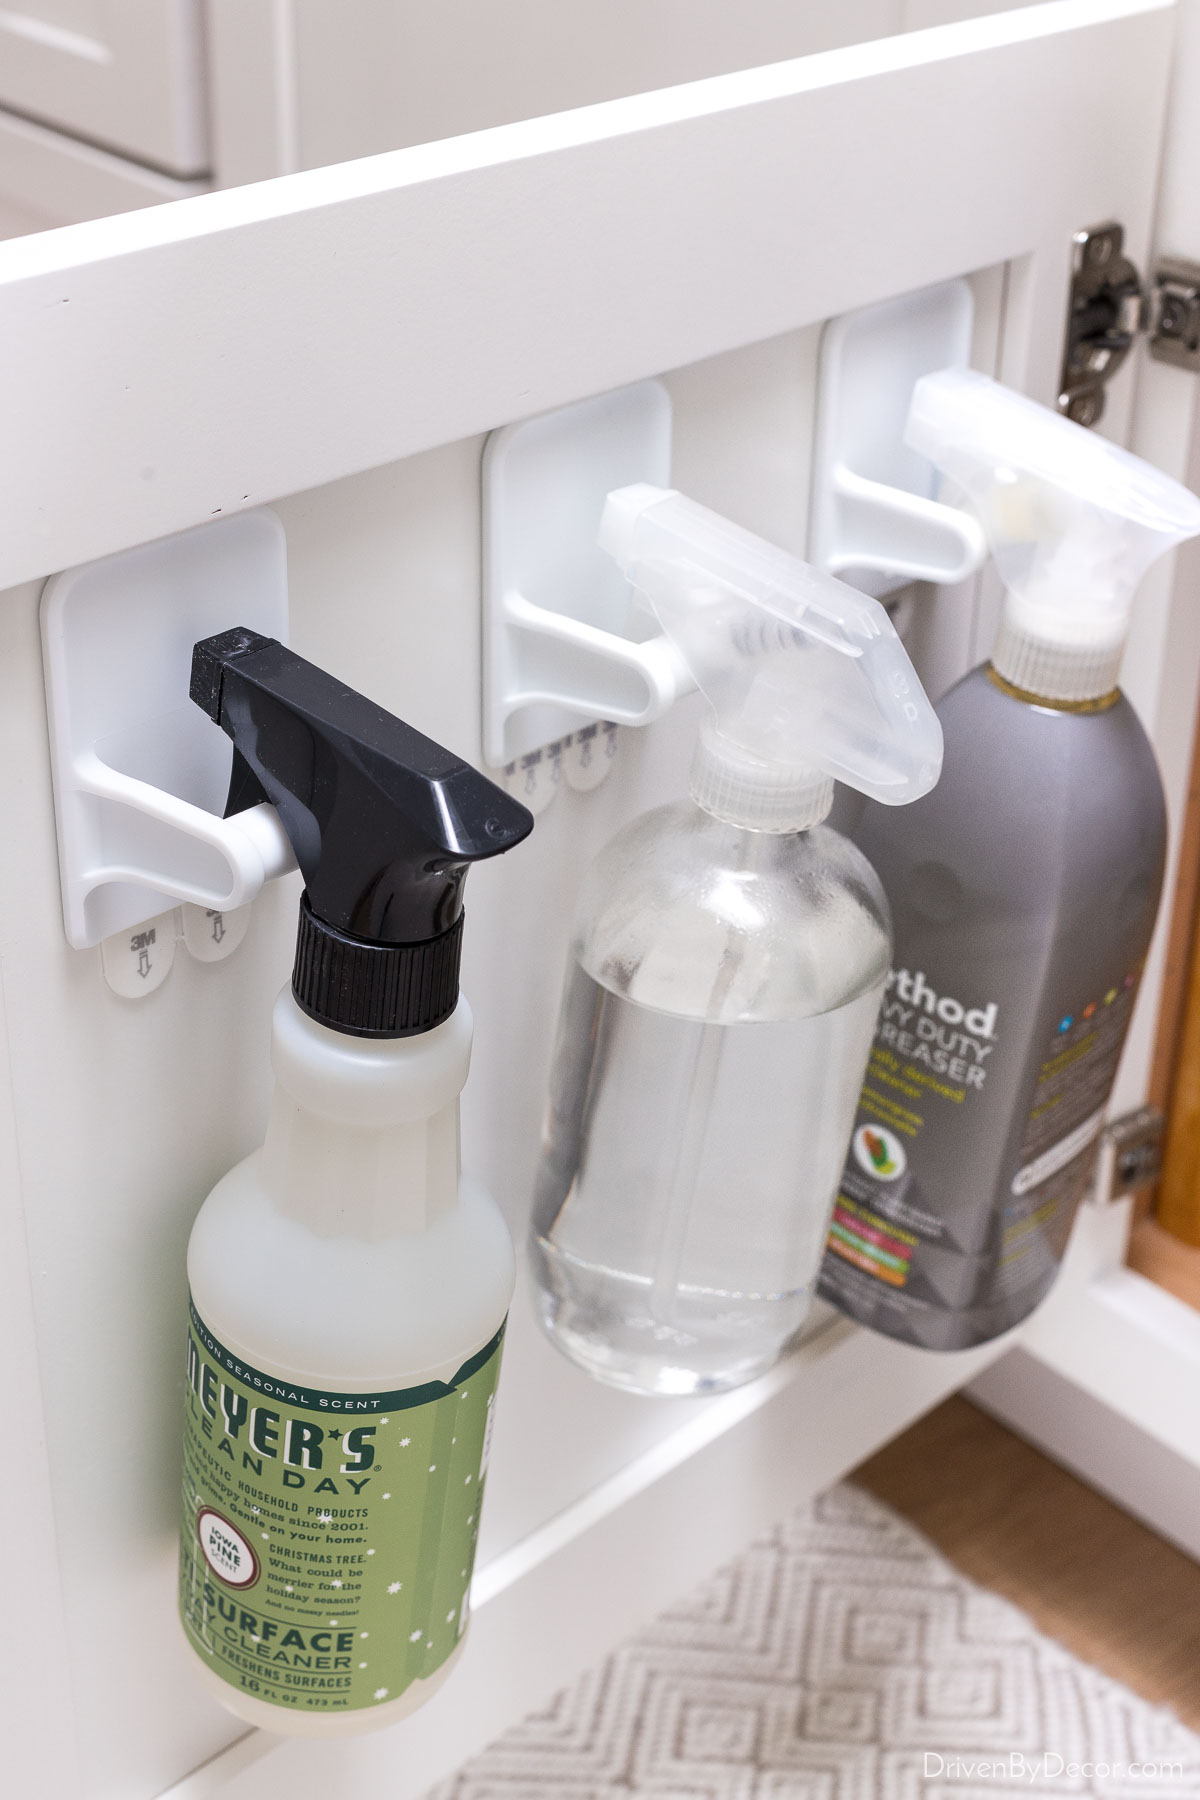 https://www.drivenbydecor.com/wp-content/uploads/2022/01/bathroom-storage-ideas-spray-bottle-hangers-2.jpg